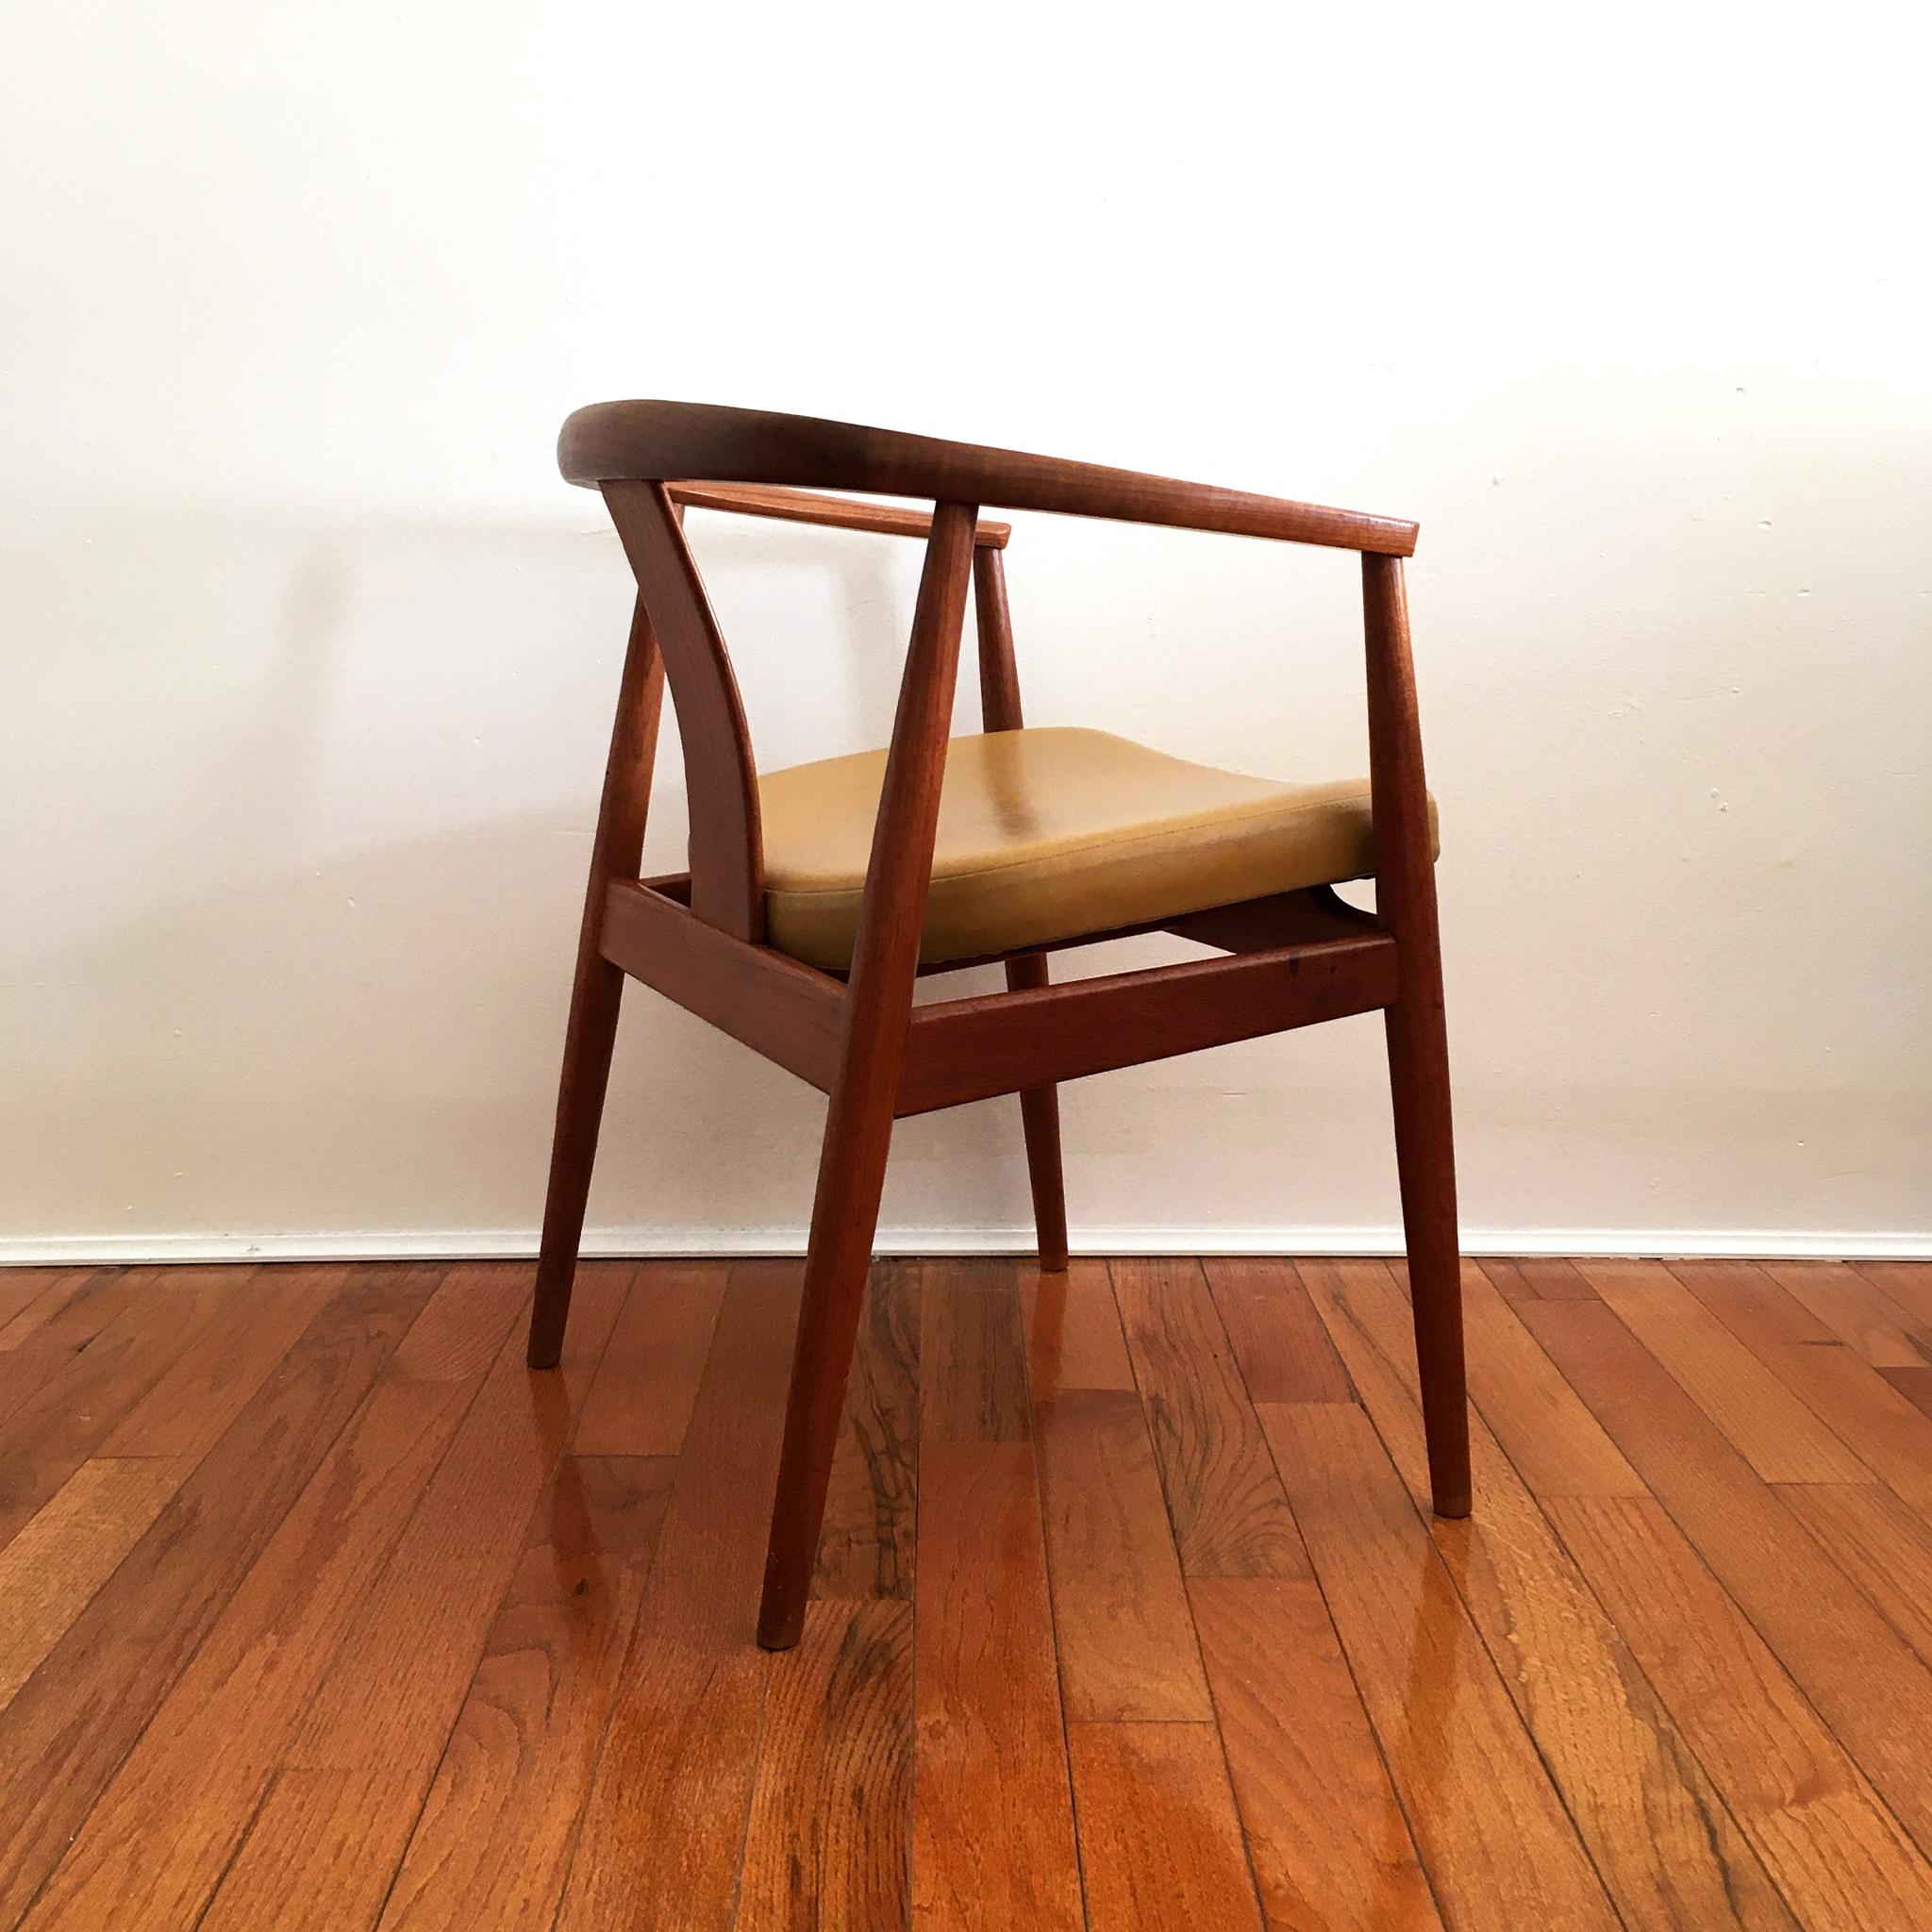 Rare Tove & Edvard Kindt-Larsen Danish Teak Chair with Yellow Ochre Leather Seat 1